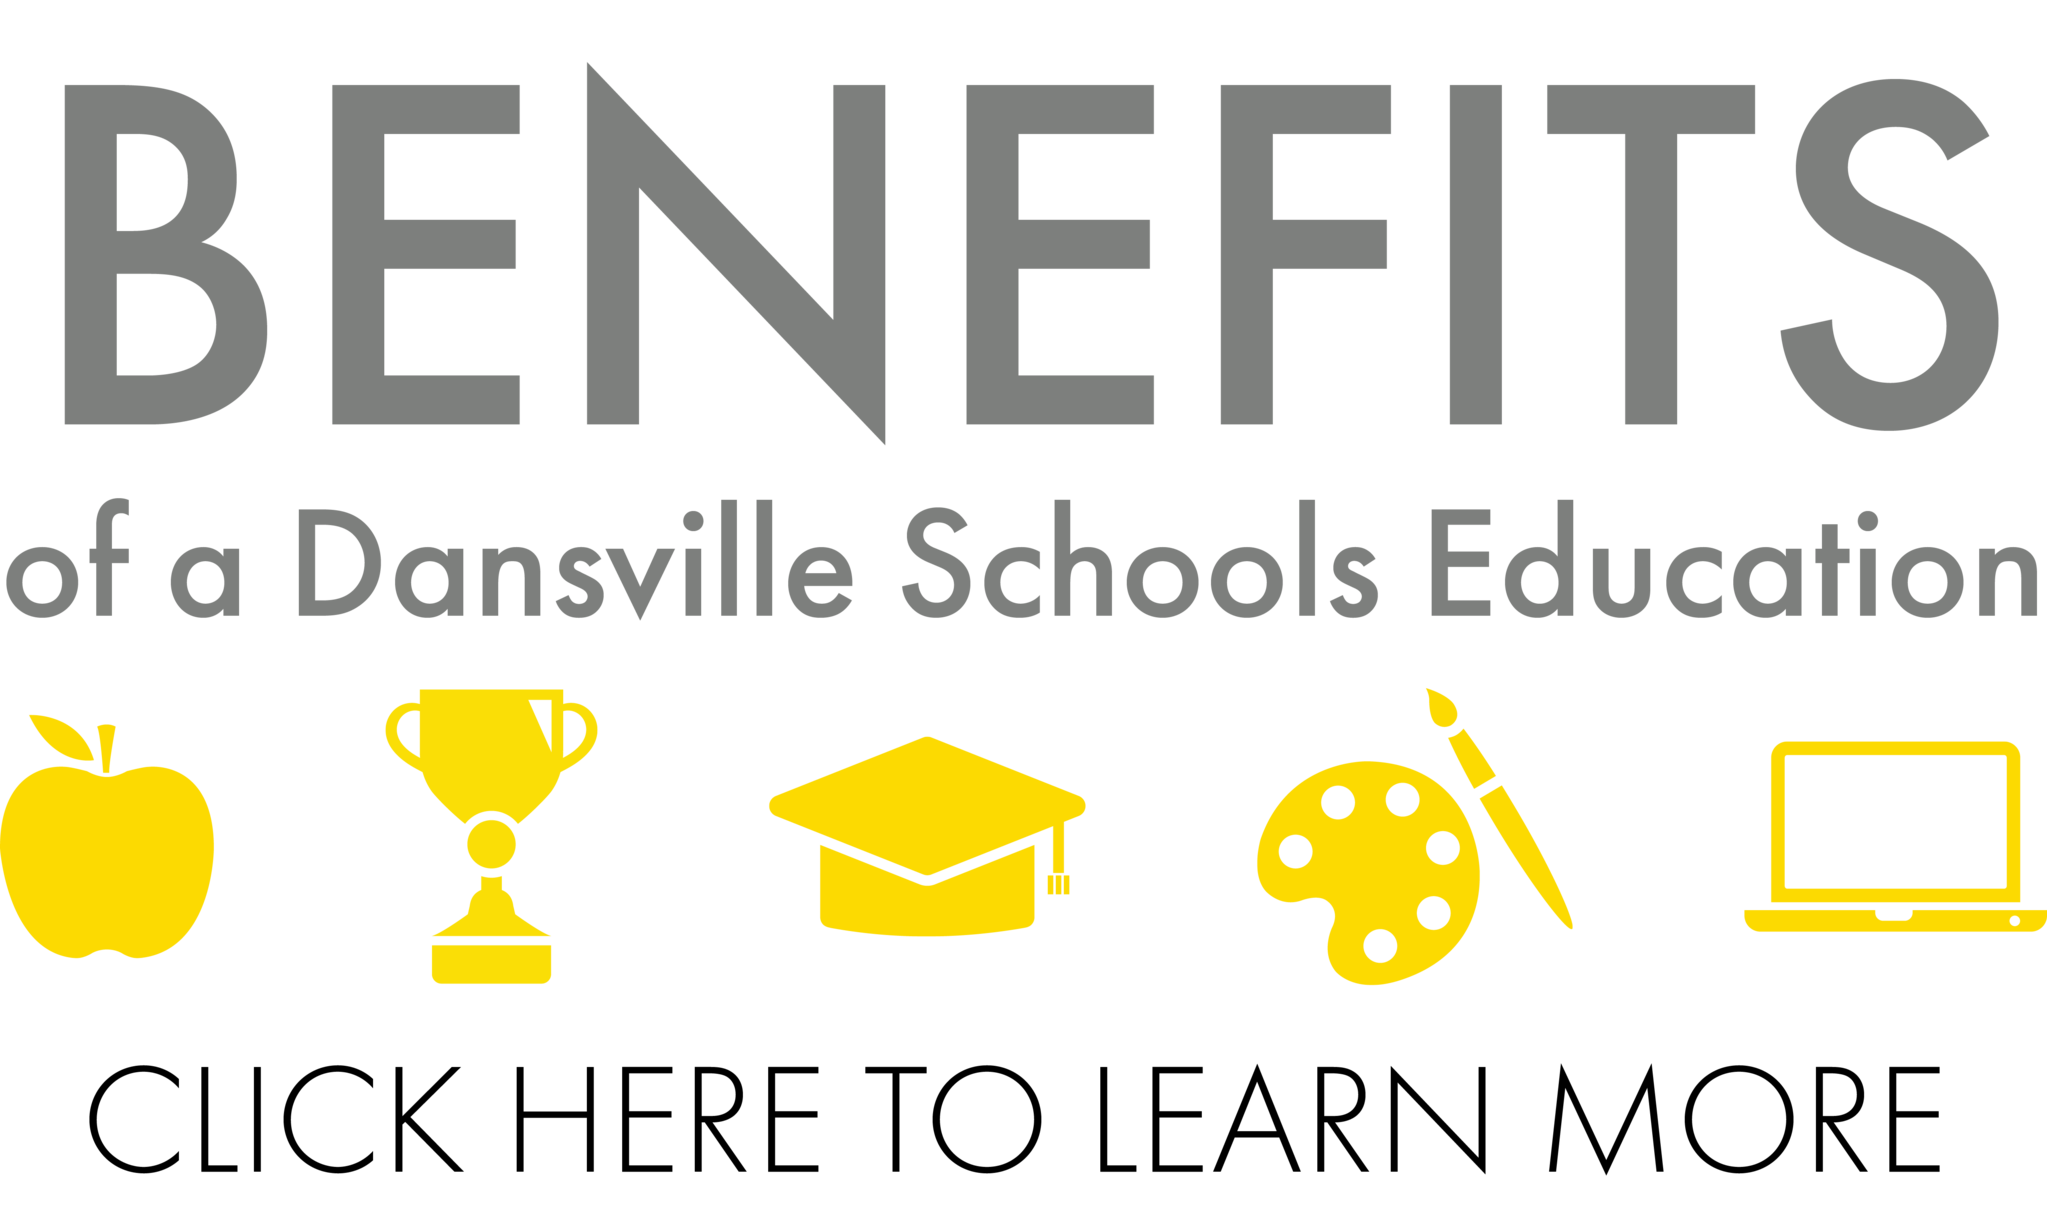 Benefits of a Dansville Schools Education